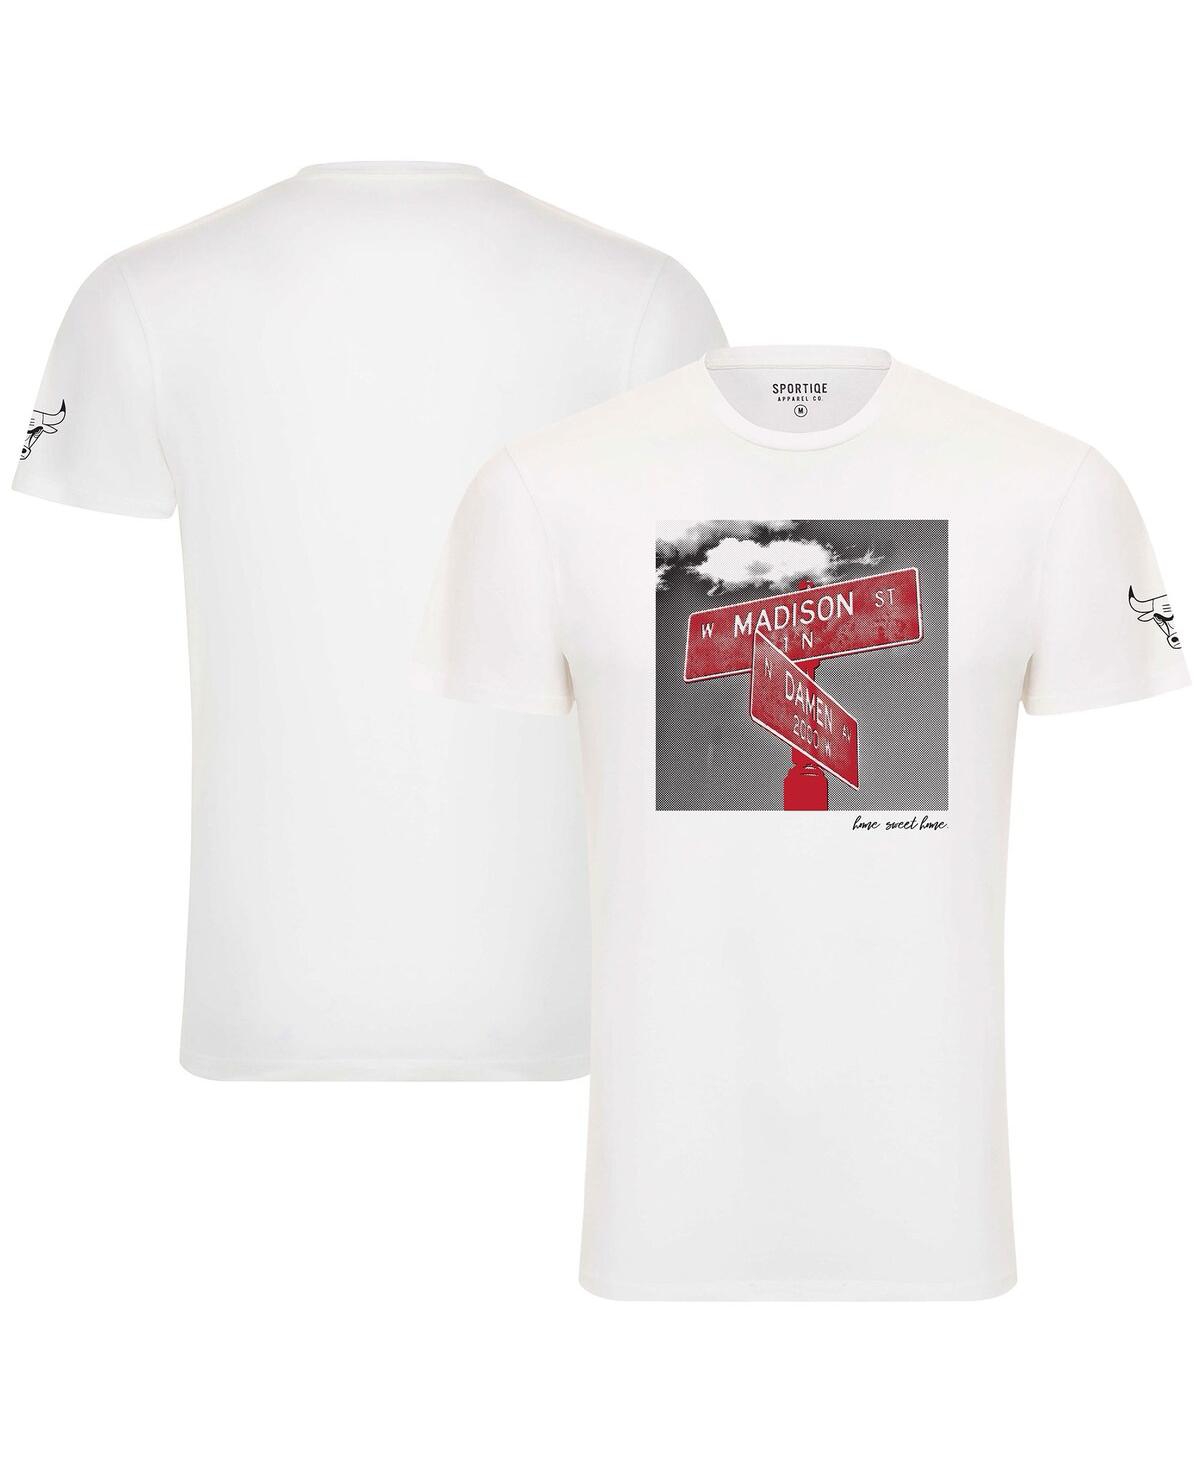 Men's and Women's Sportiqe White Chicago Bulls 1966 Collection Bingham T-shirt - White